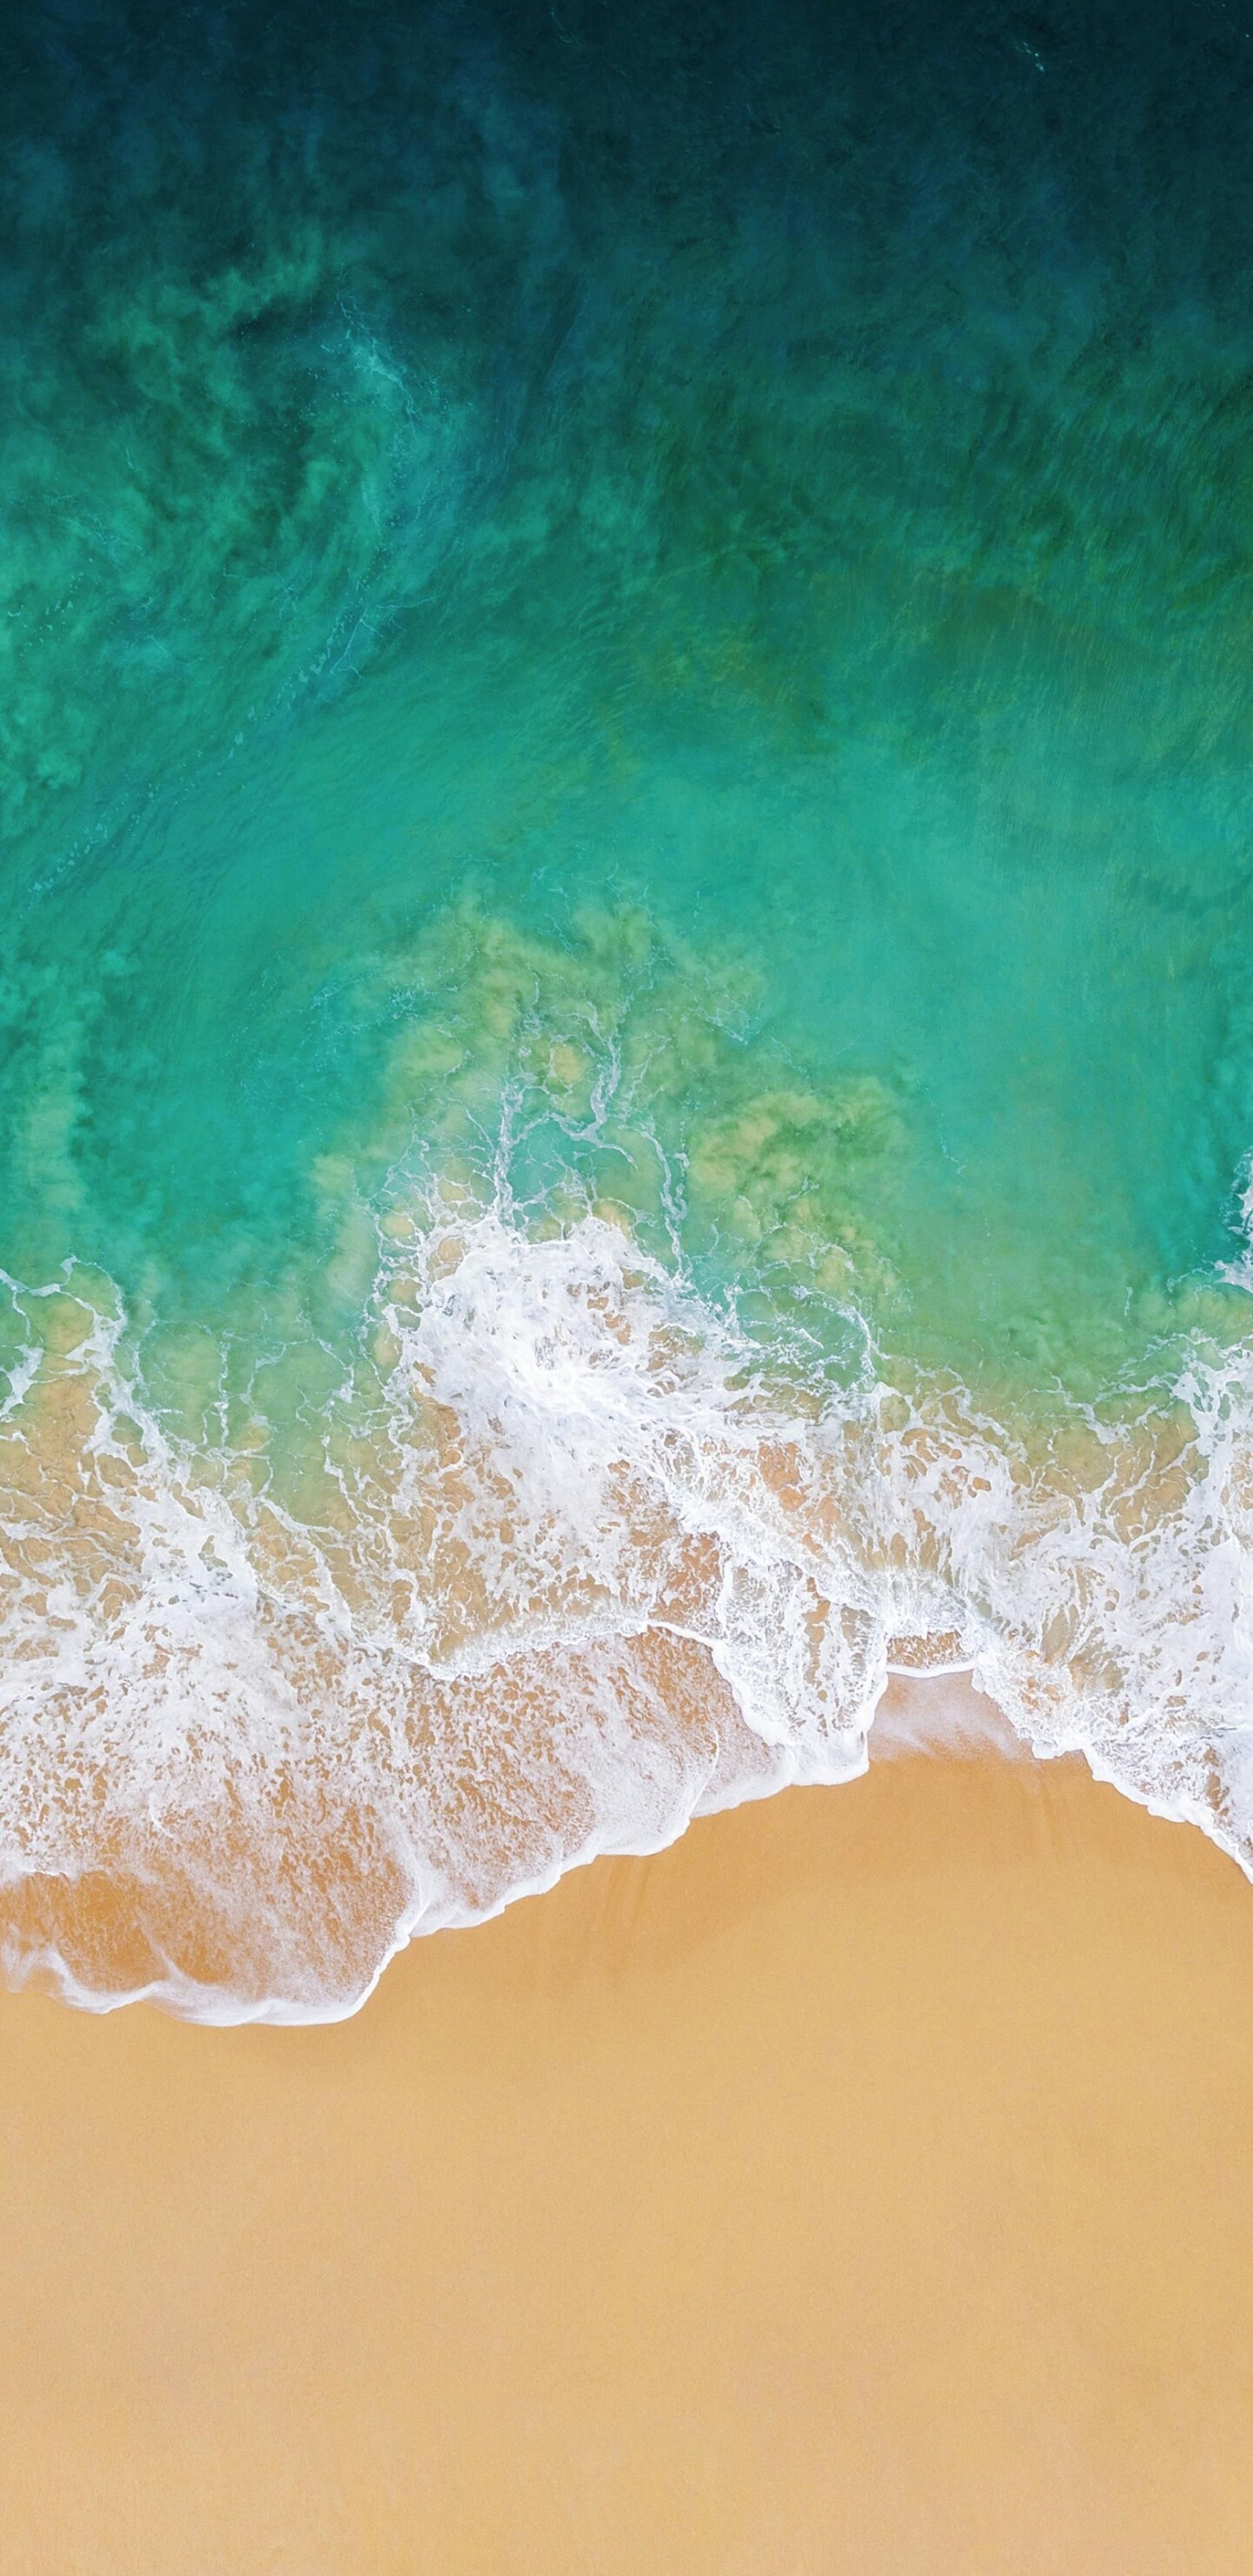 Sea 4K Wallpaper 2. Ios 11 wallpaper, iPhone wallpaper ocean, Beach wallpaper iphone